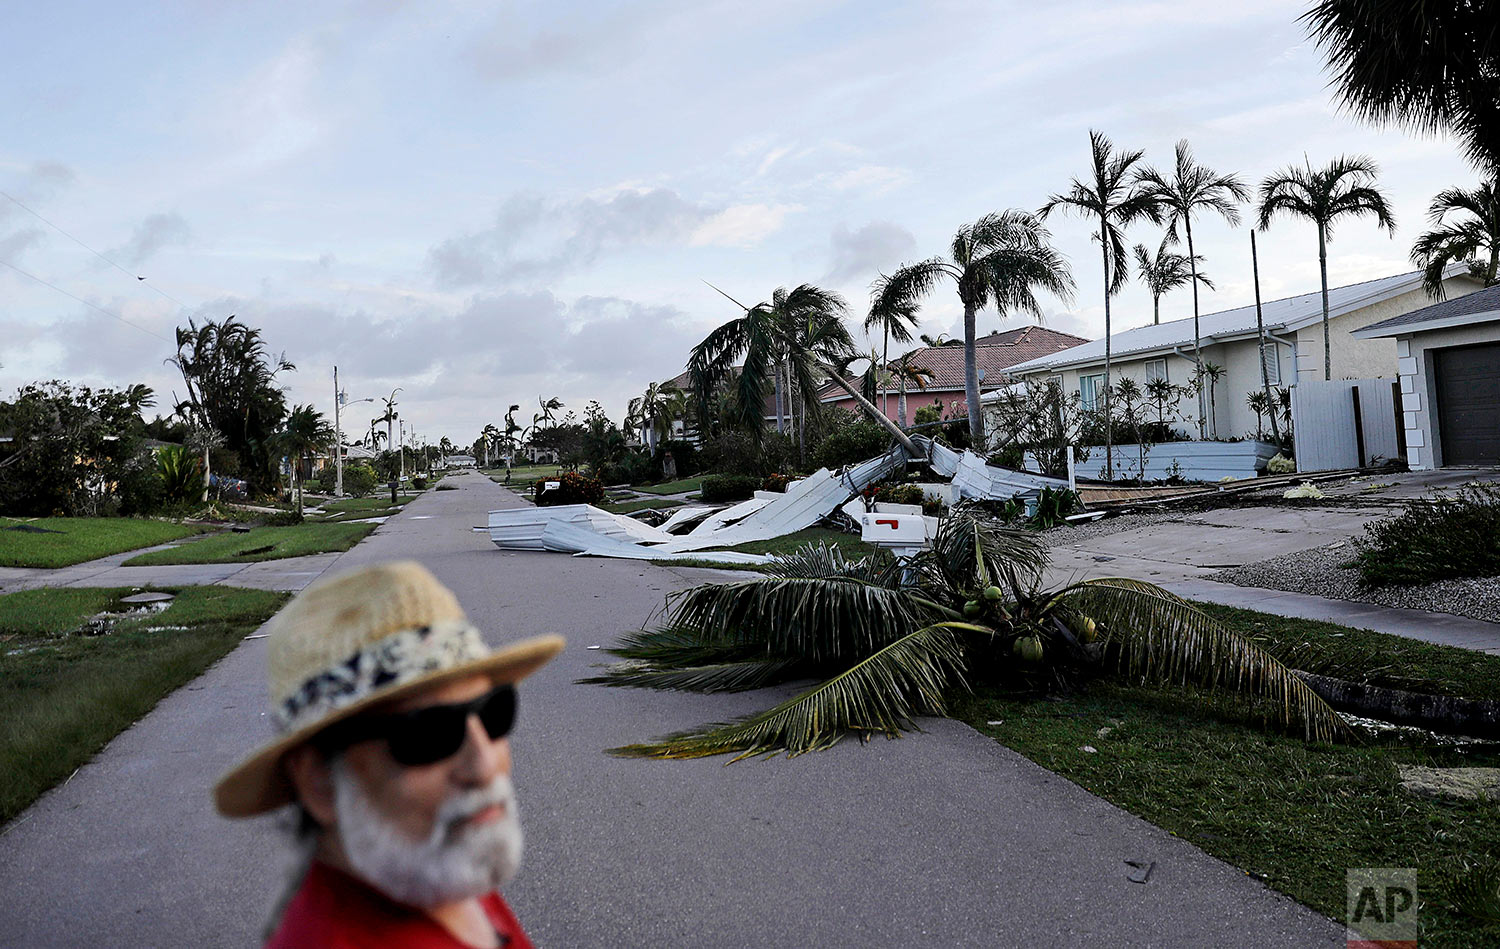  A fallen palm tree and a roof litters a street as Rick Freedman checks his neighborhood's damage from Hurricane Irma in Marco Island, Fla., Monday, Sept. 11, 2017. (AP Photo/David Goldman) 